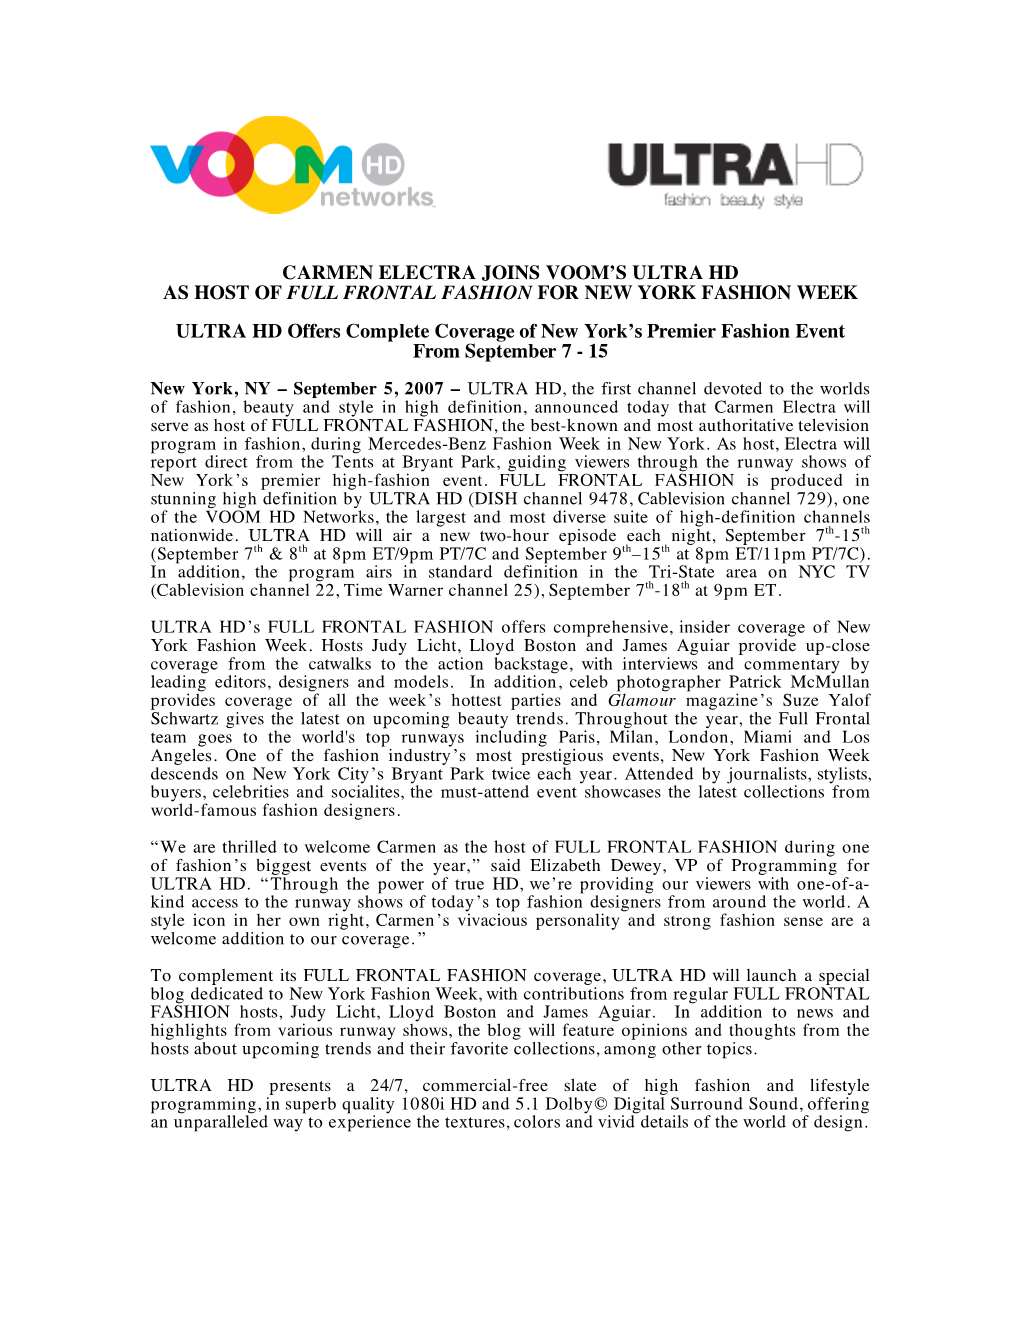 Carmen Electra Joins Voom's Ultra Hd As Host of Full